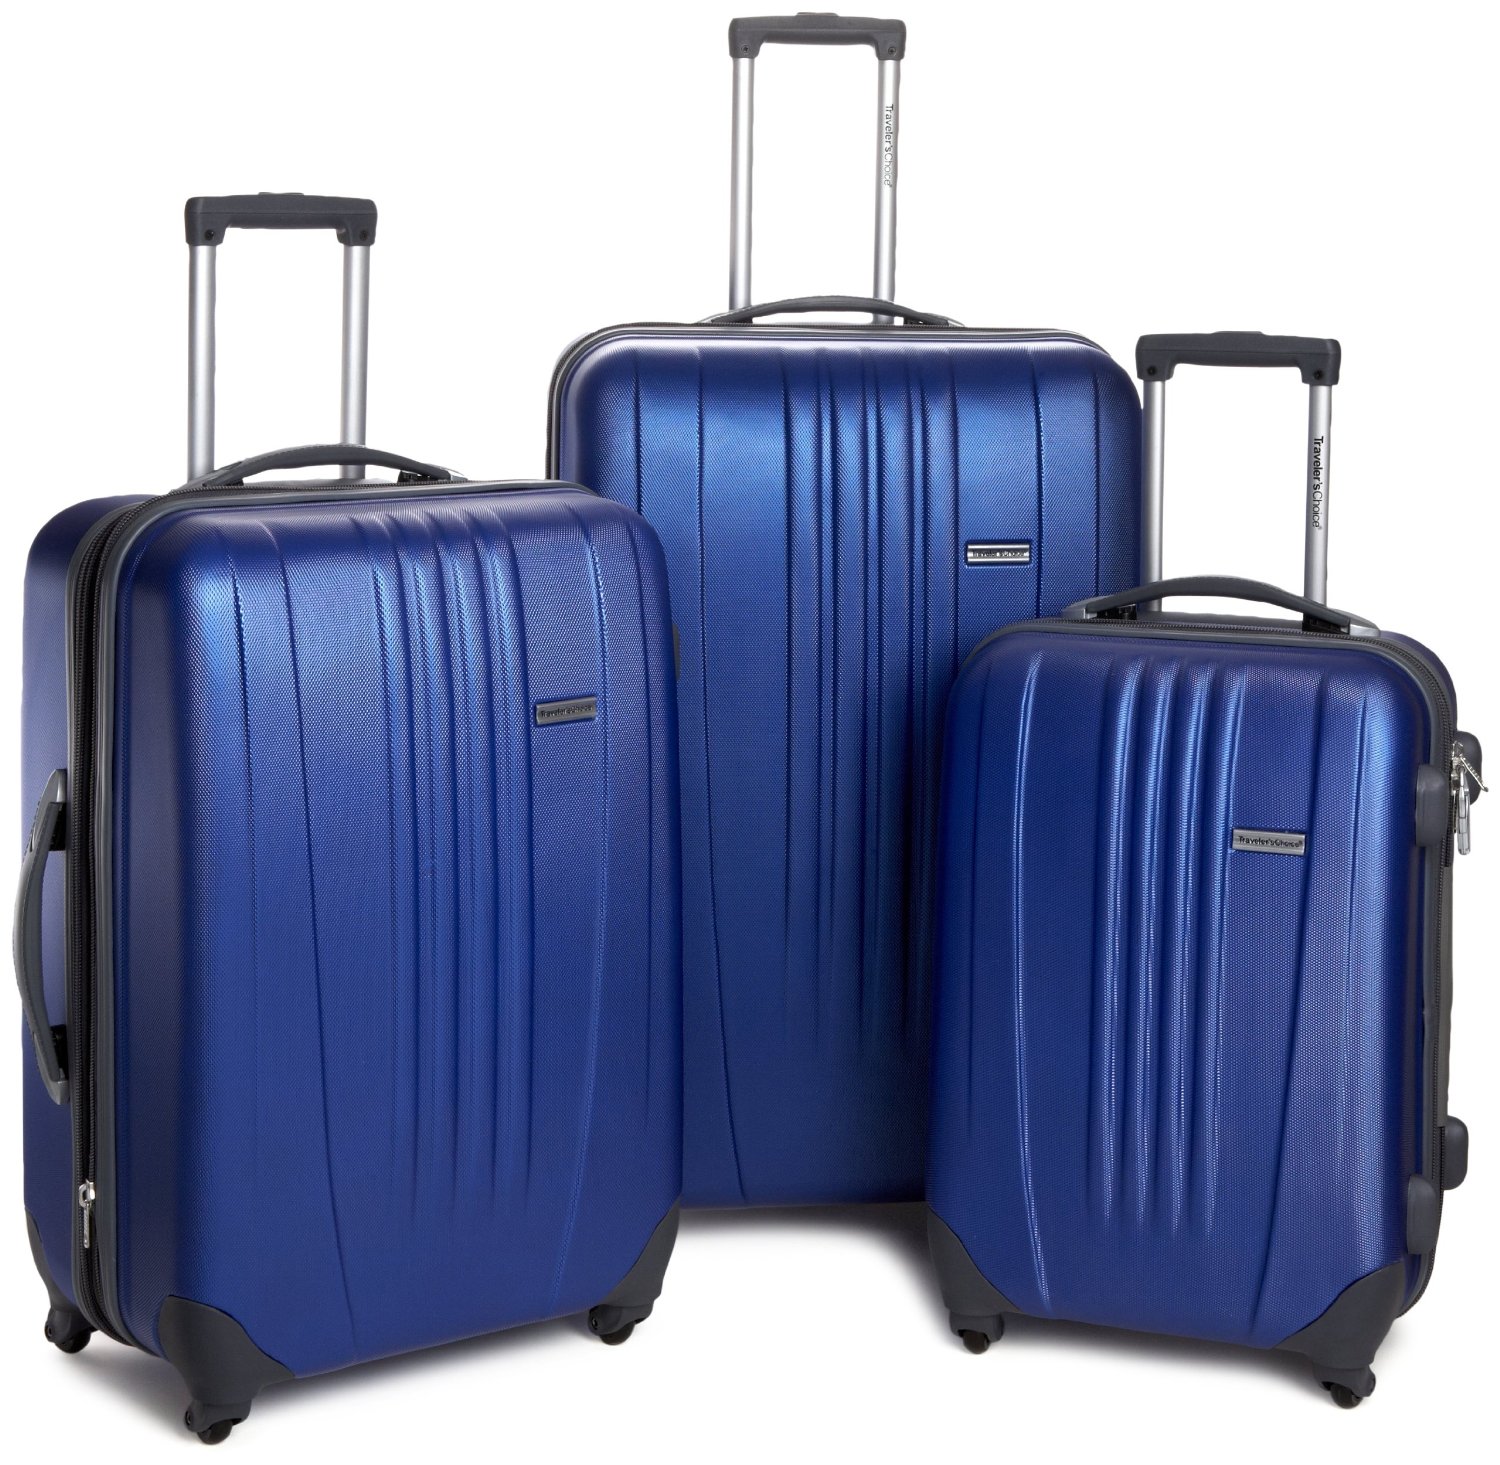 Traveler's Choice Luggage Toronto Three Piece Hardside Spinner Luggage ...